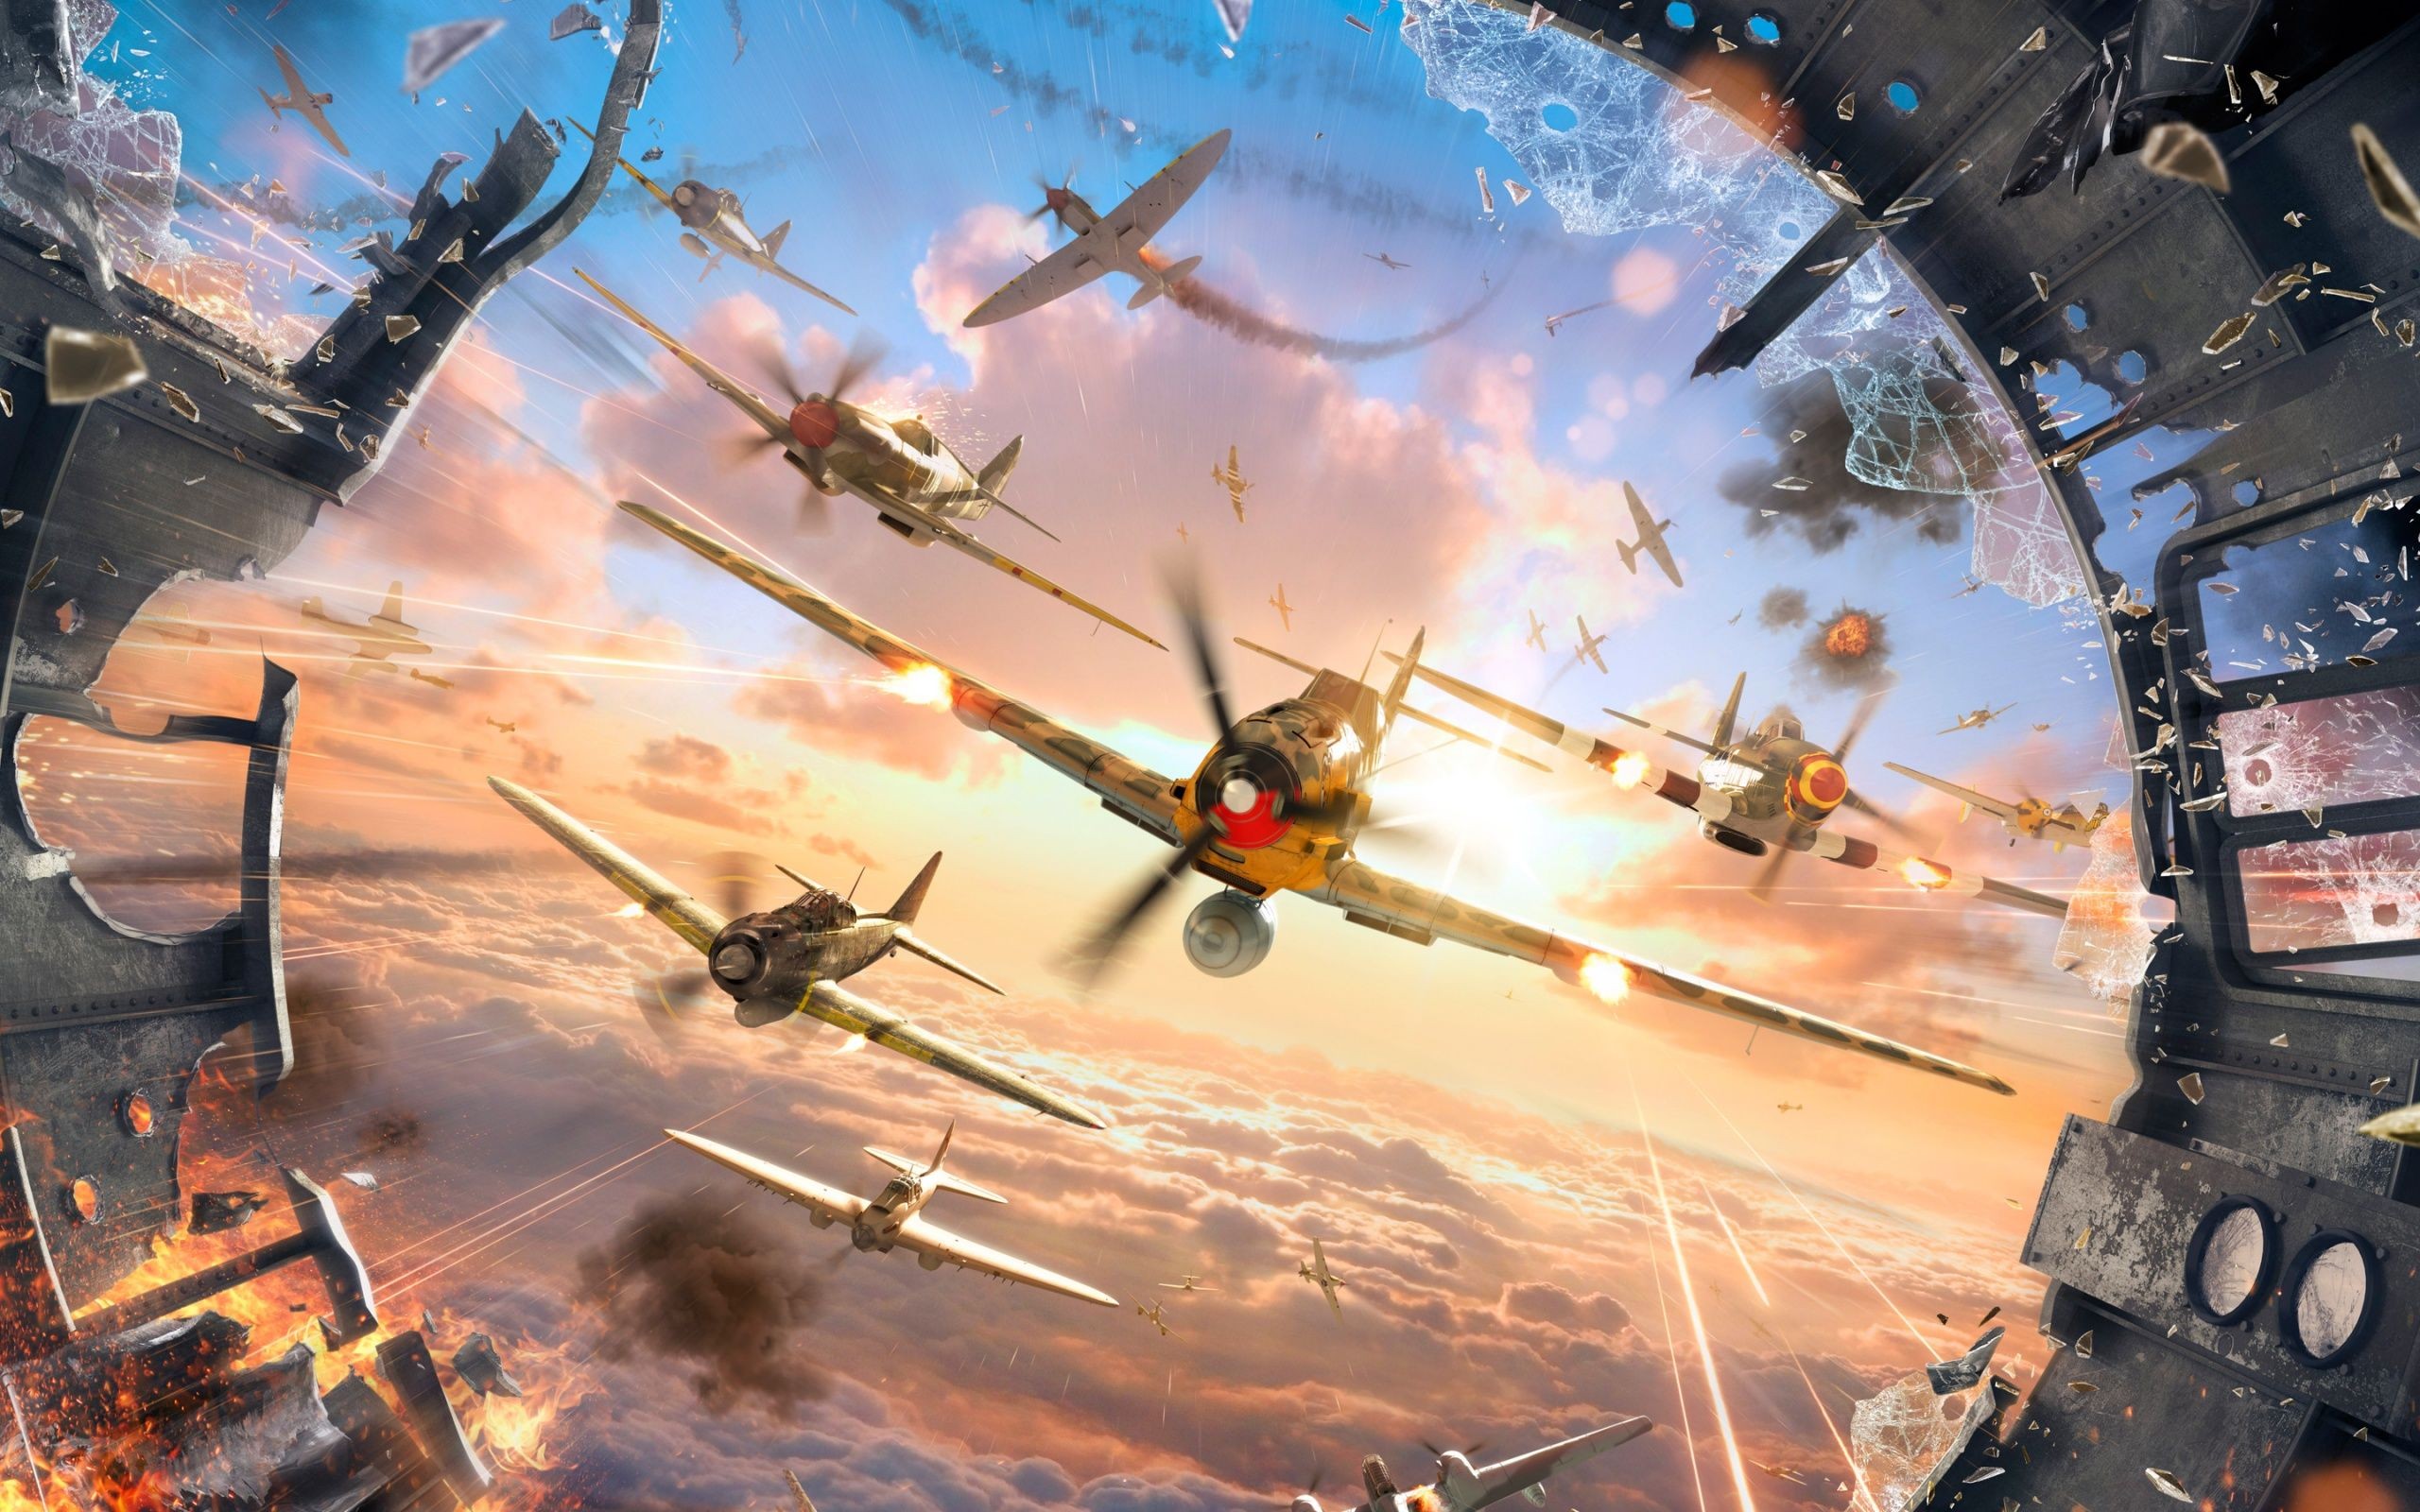 World Of Warplanes Wallpapers